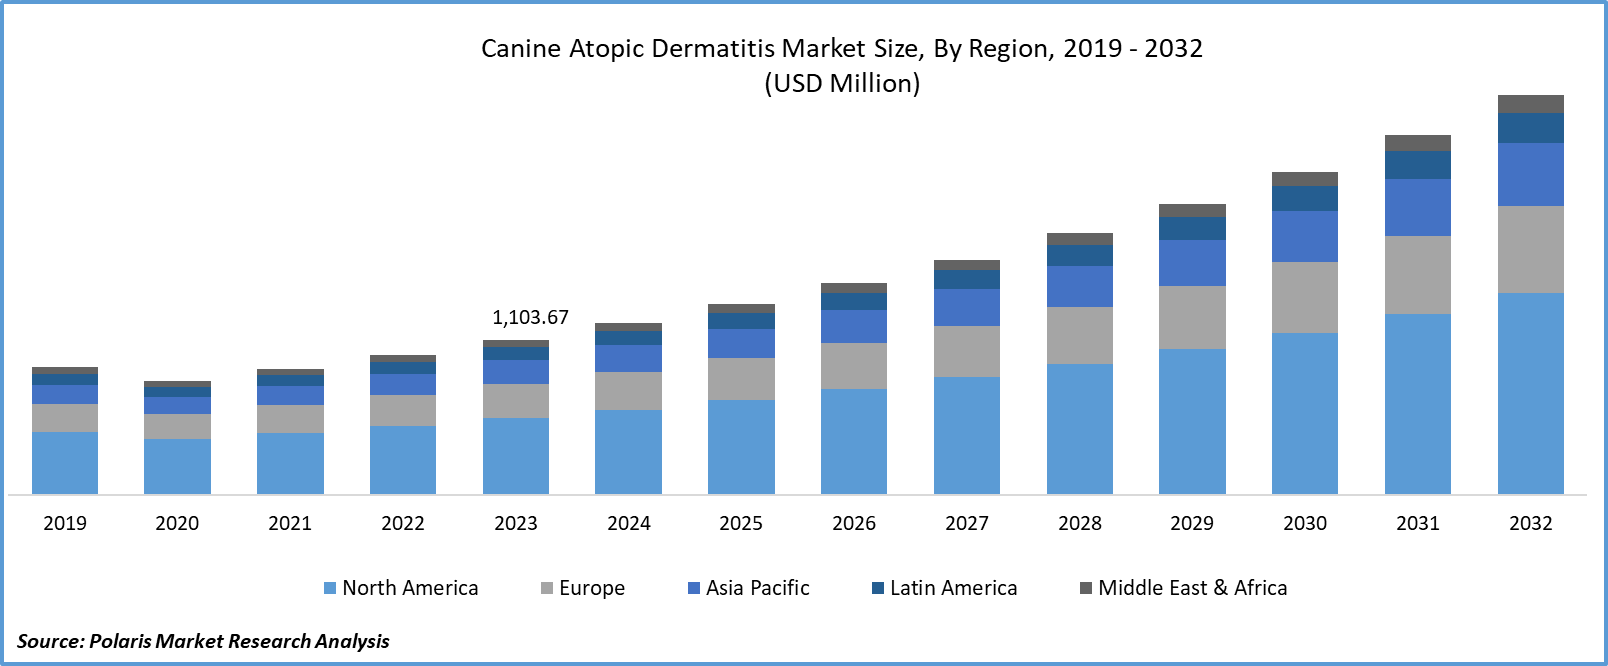 Canine Atopic Dermatitis Market Size